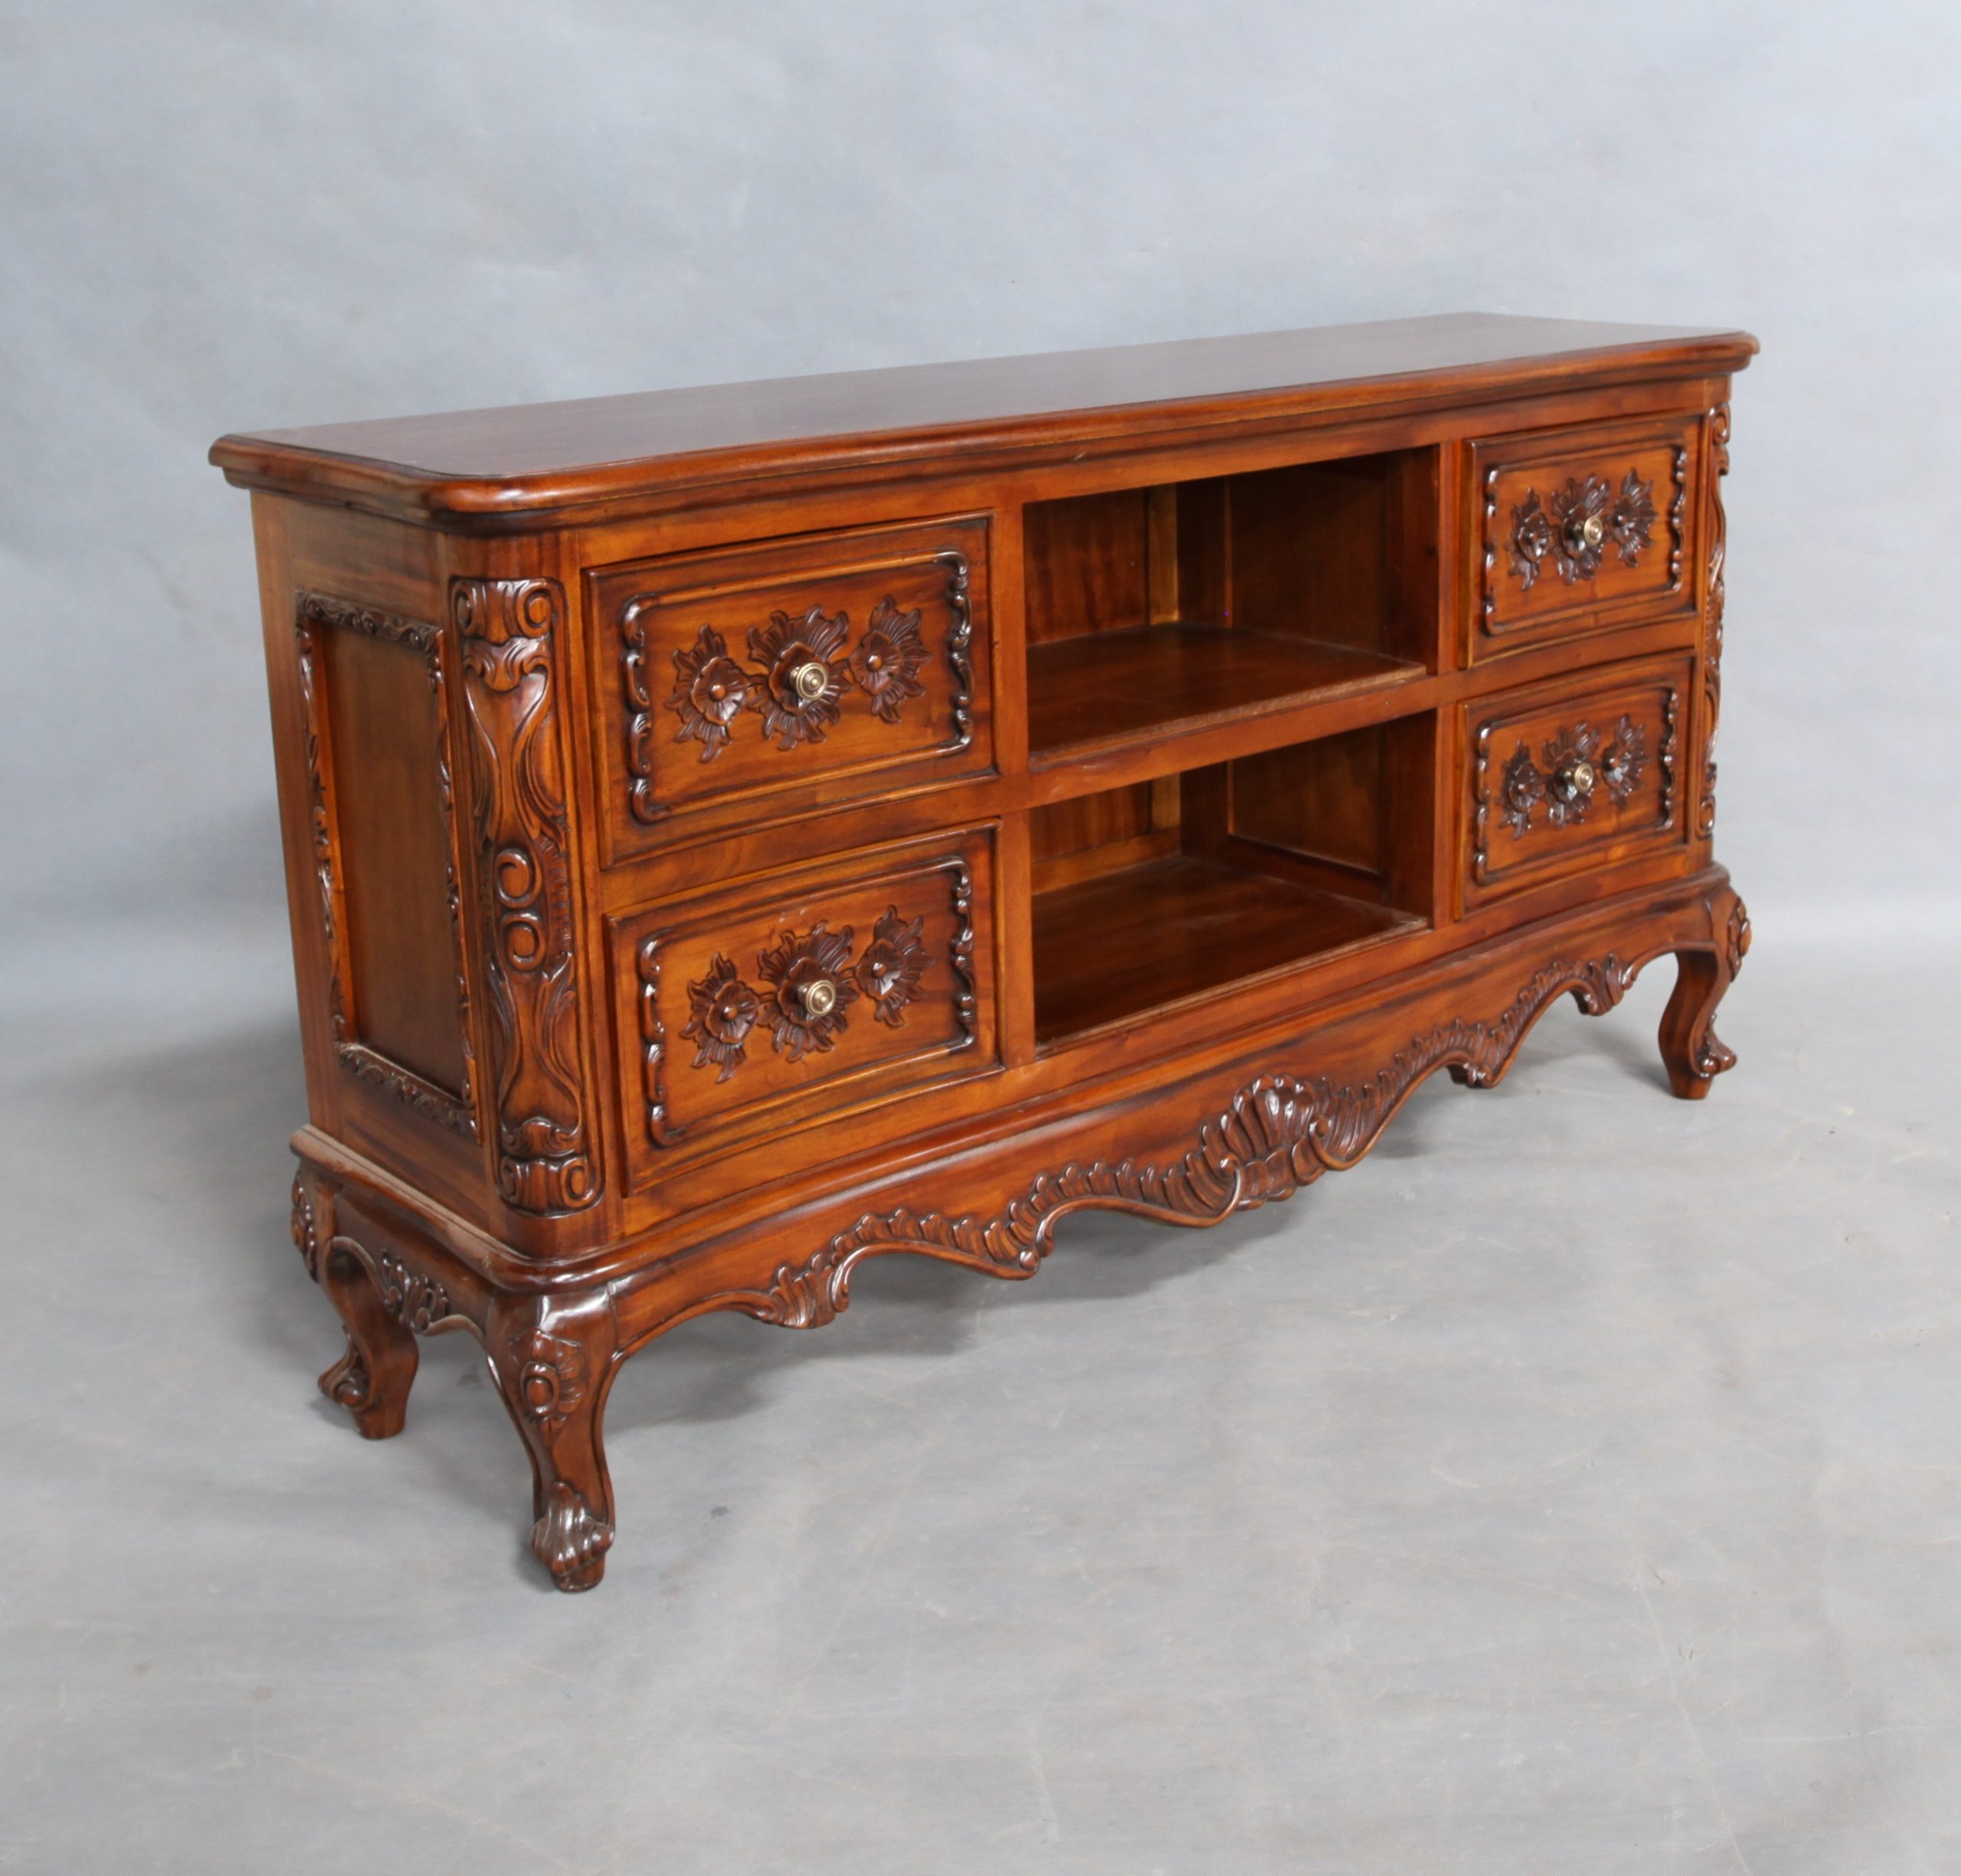 Antique Wood Furniture Manufacturer